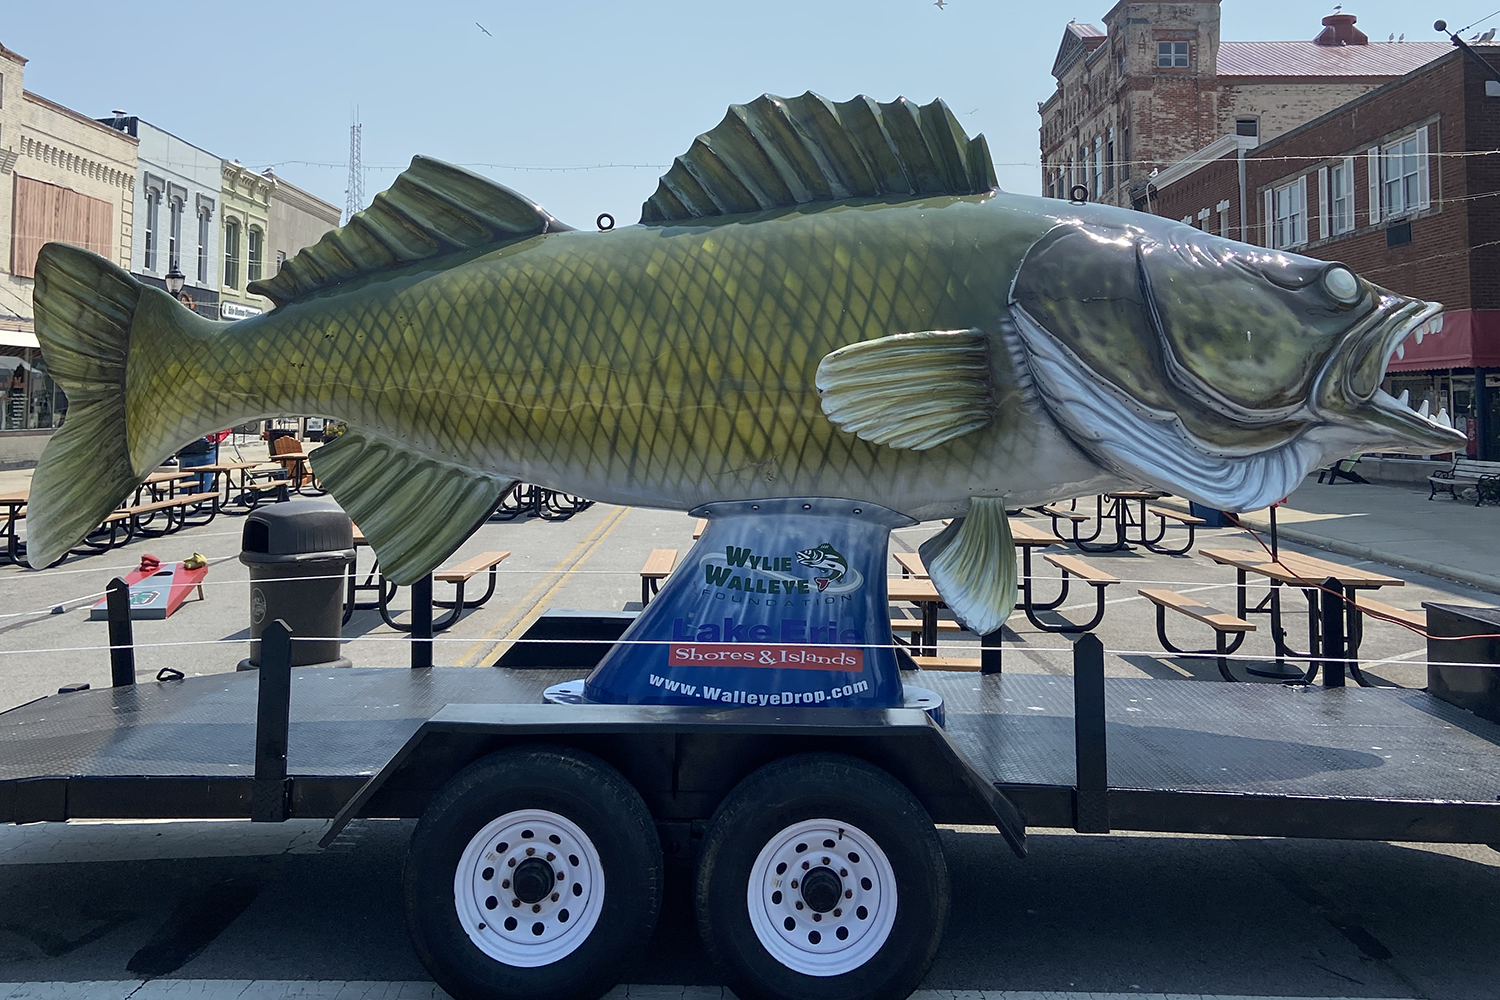 The rentable walleye trailer in Port Clinton, Ohio. Walleye fishing is big business along Lake Erie.